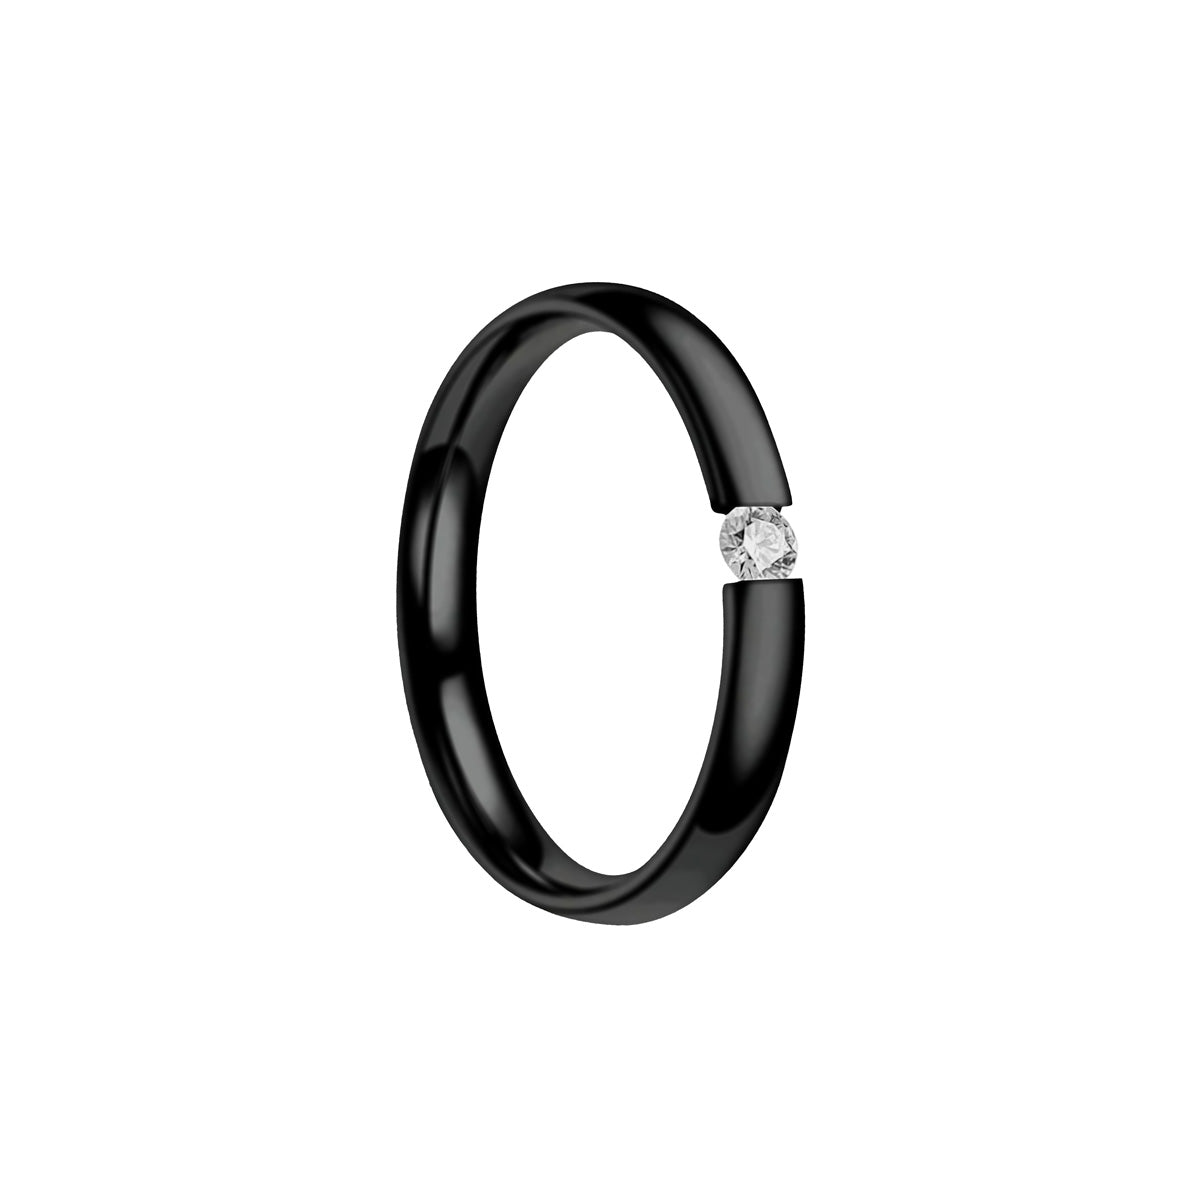 Narrow black ring with zirconia stone 3mm (Steel 316L)